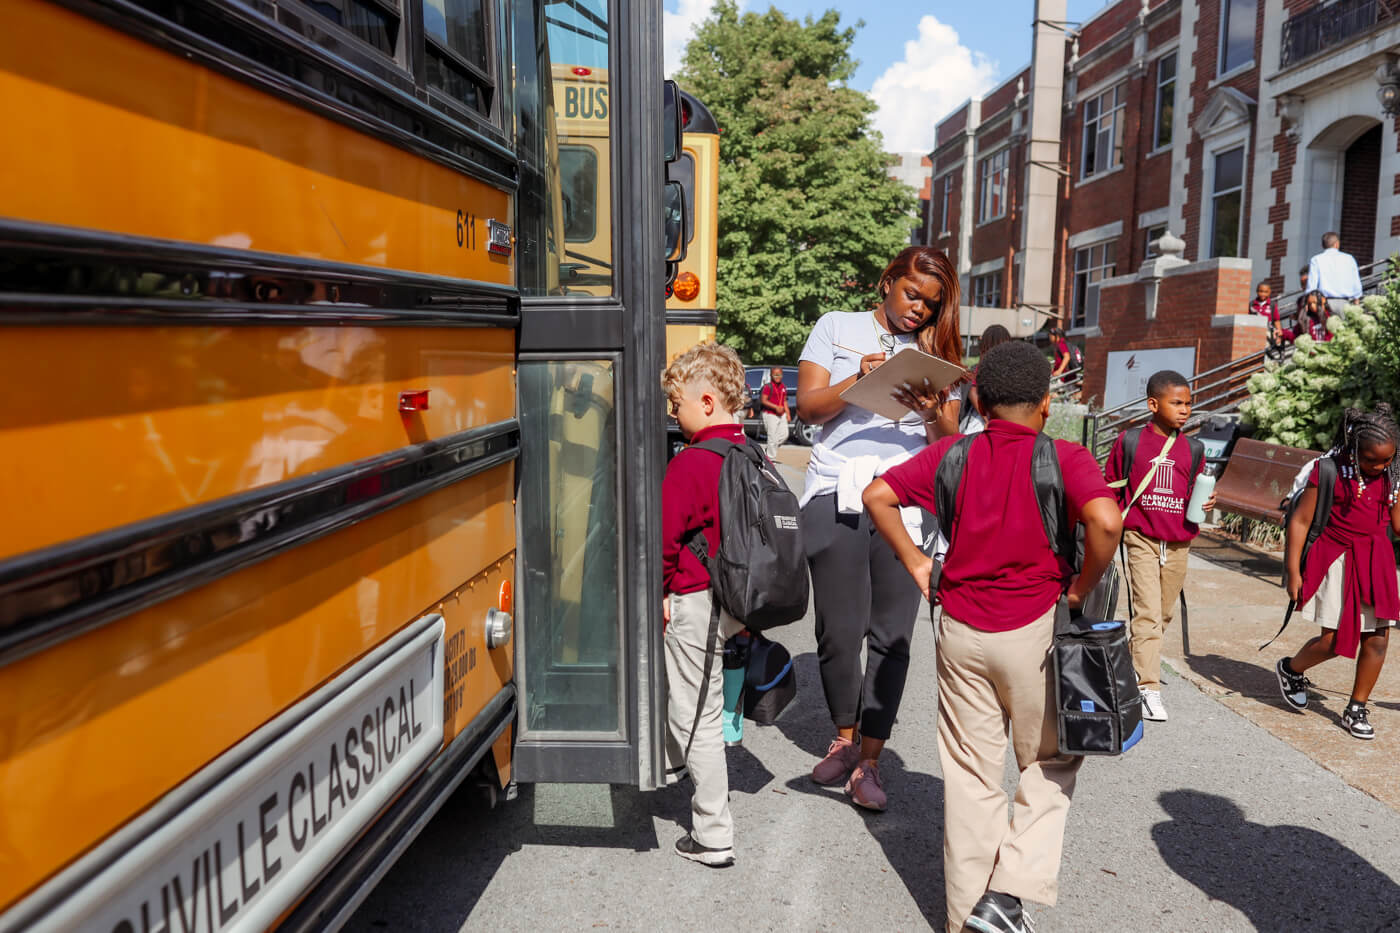 Students get on a Nashville Classical schoolbus while a teacher supervises